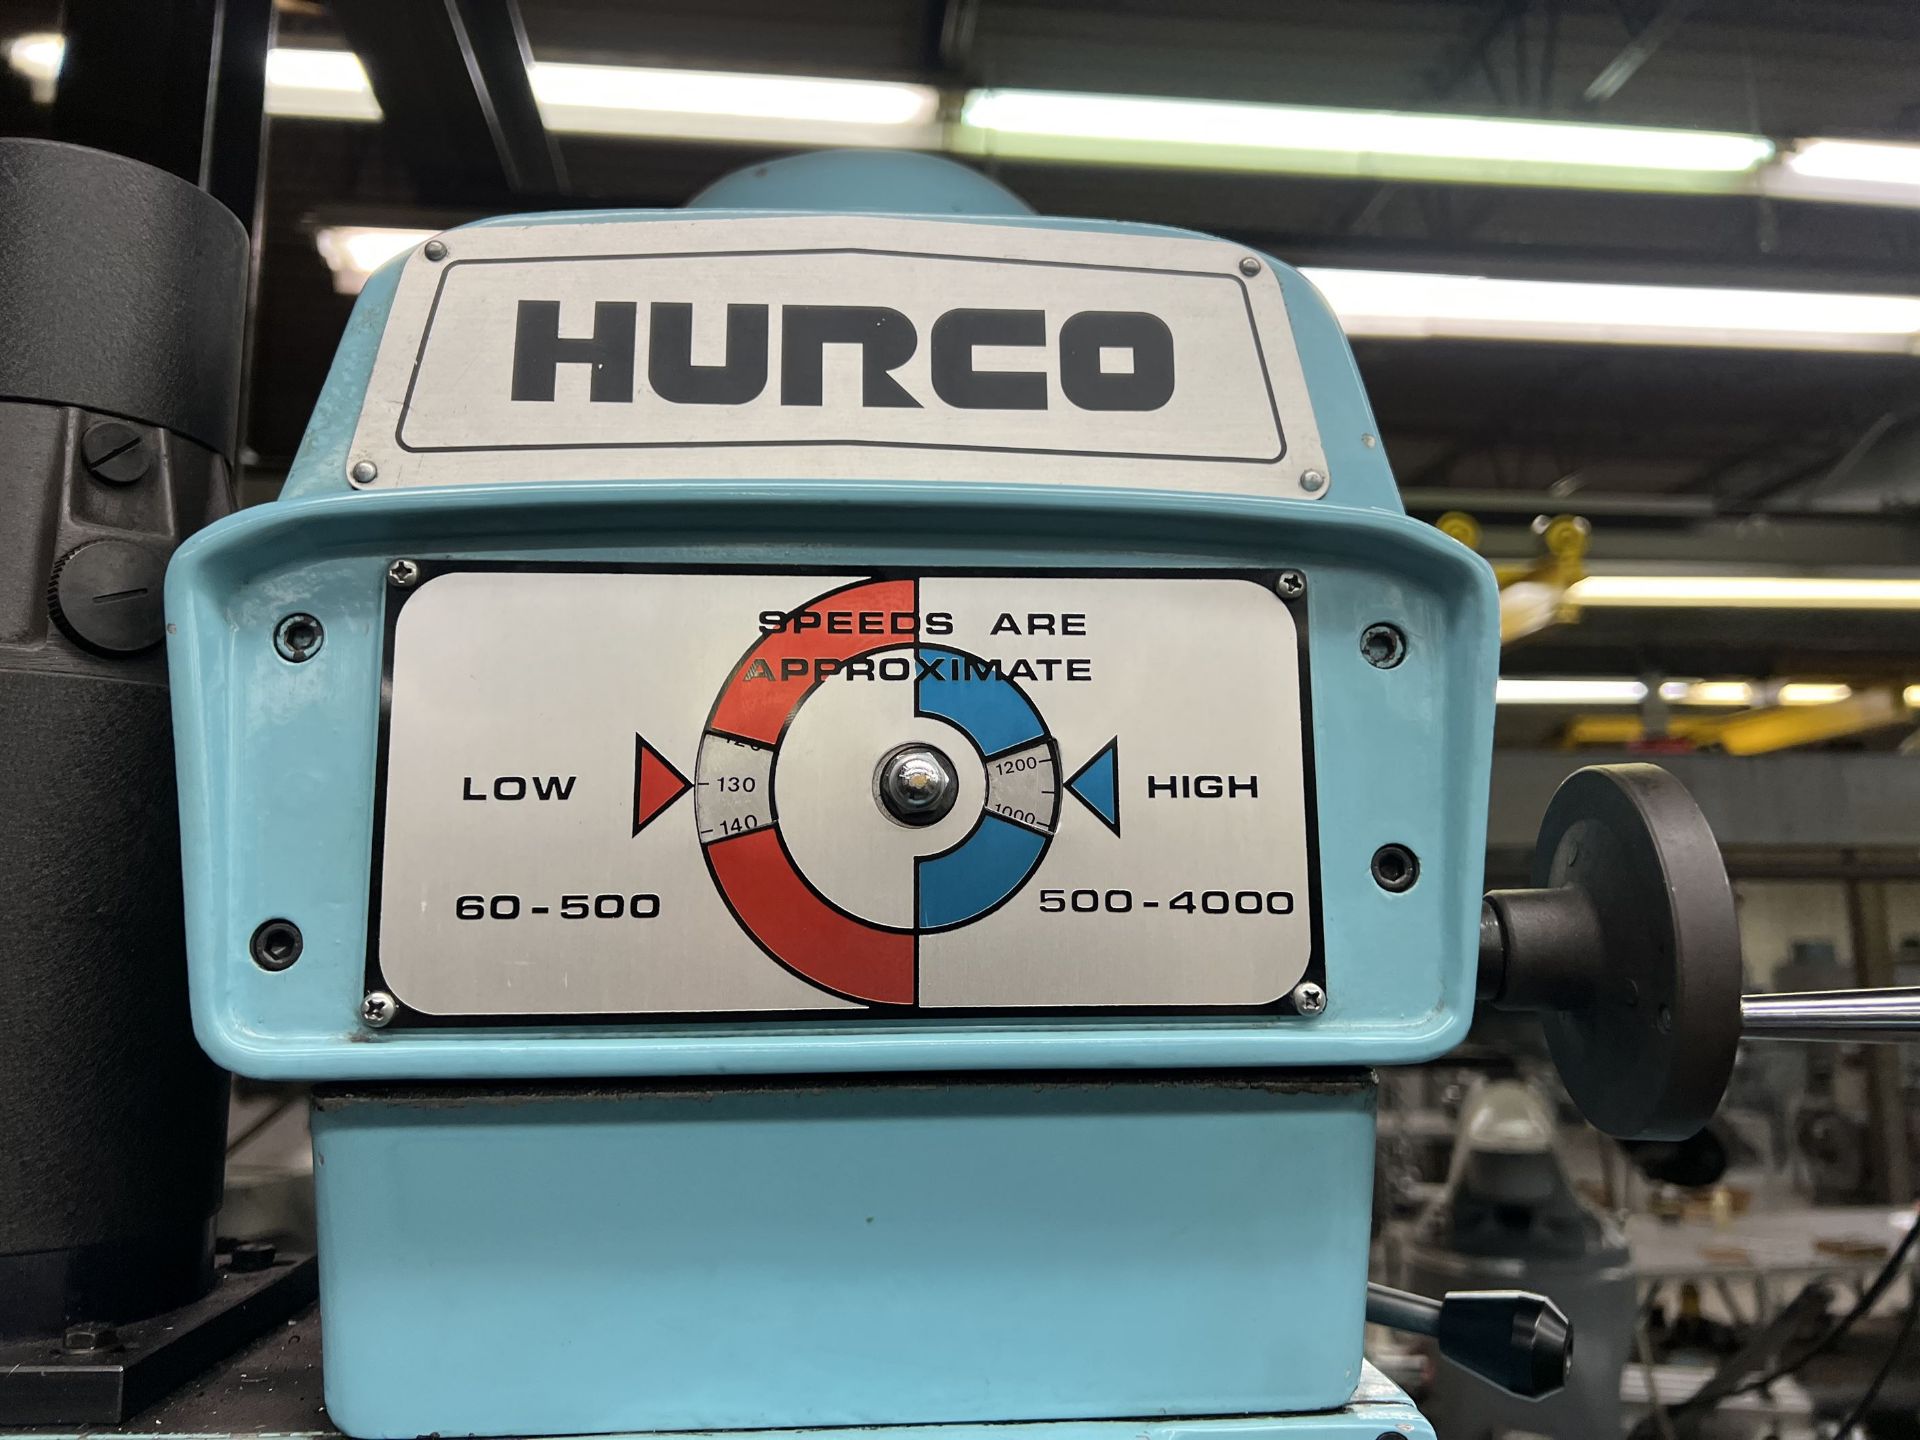 HURCO KM-3 CNC Vertical Milling Machine, s/n SDD-9002073D, HURCO Ultimax CNC Control, 11-3/4" x - Image 6 of 7